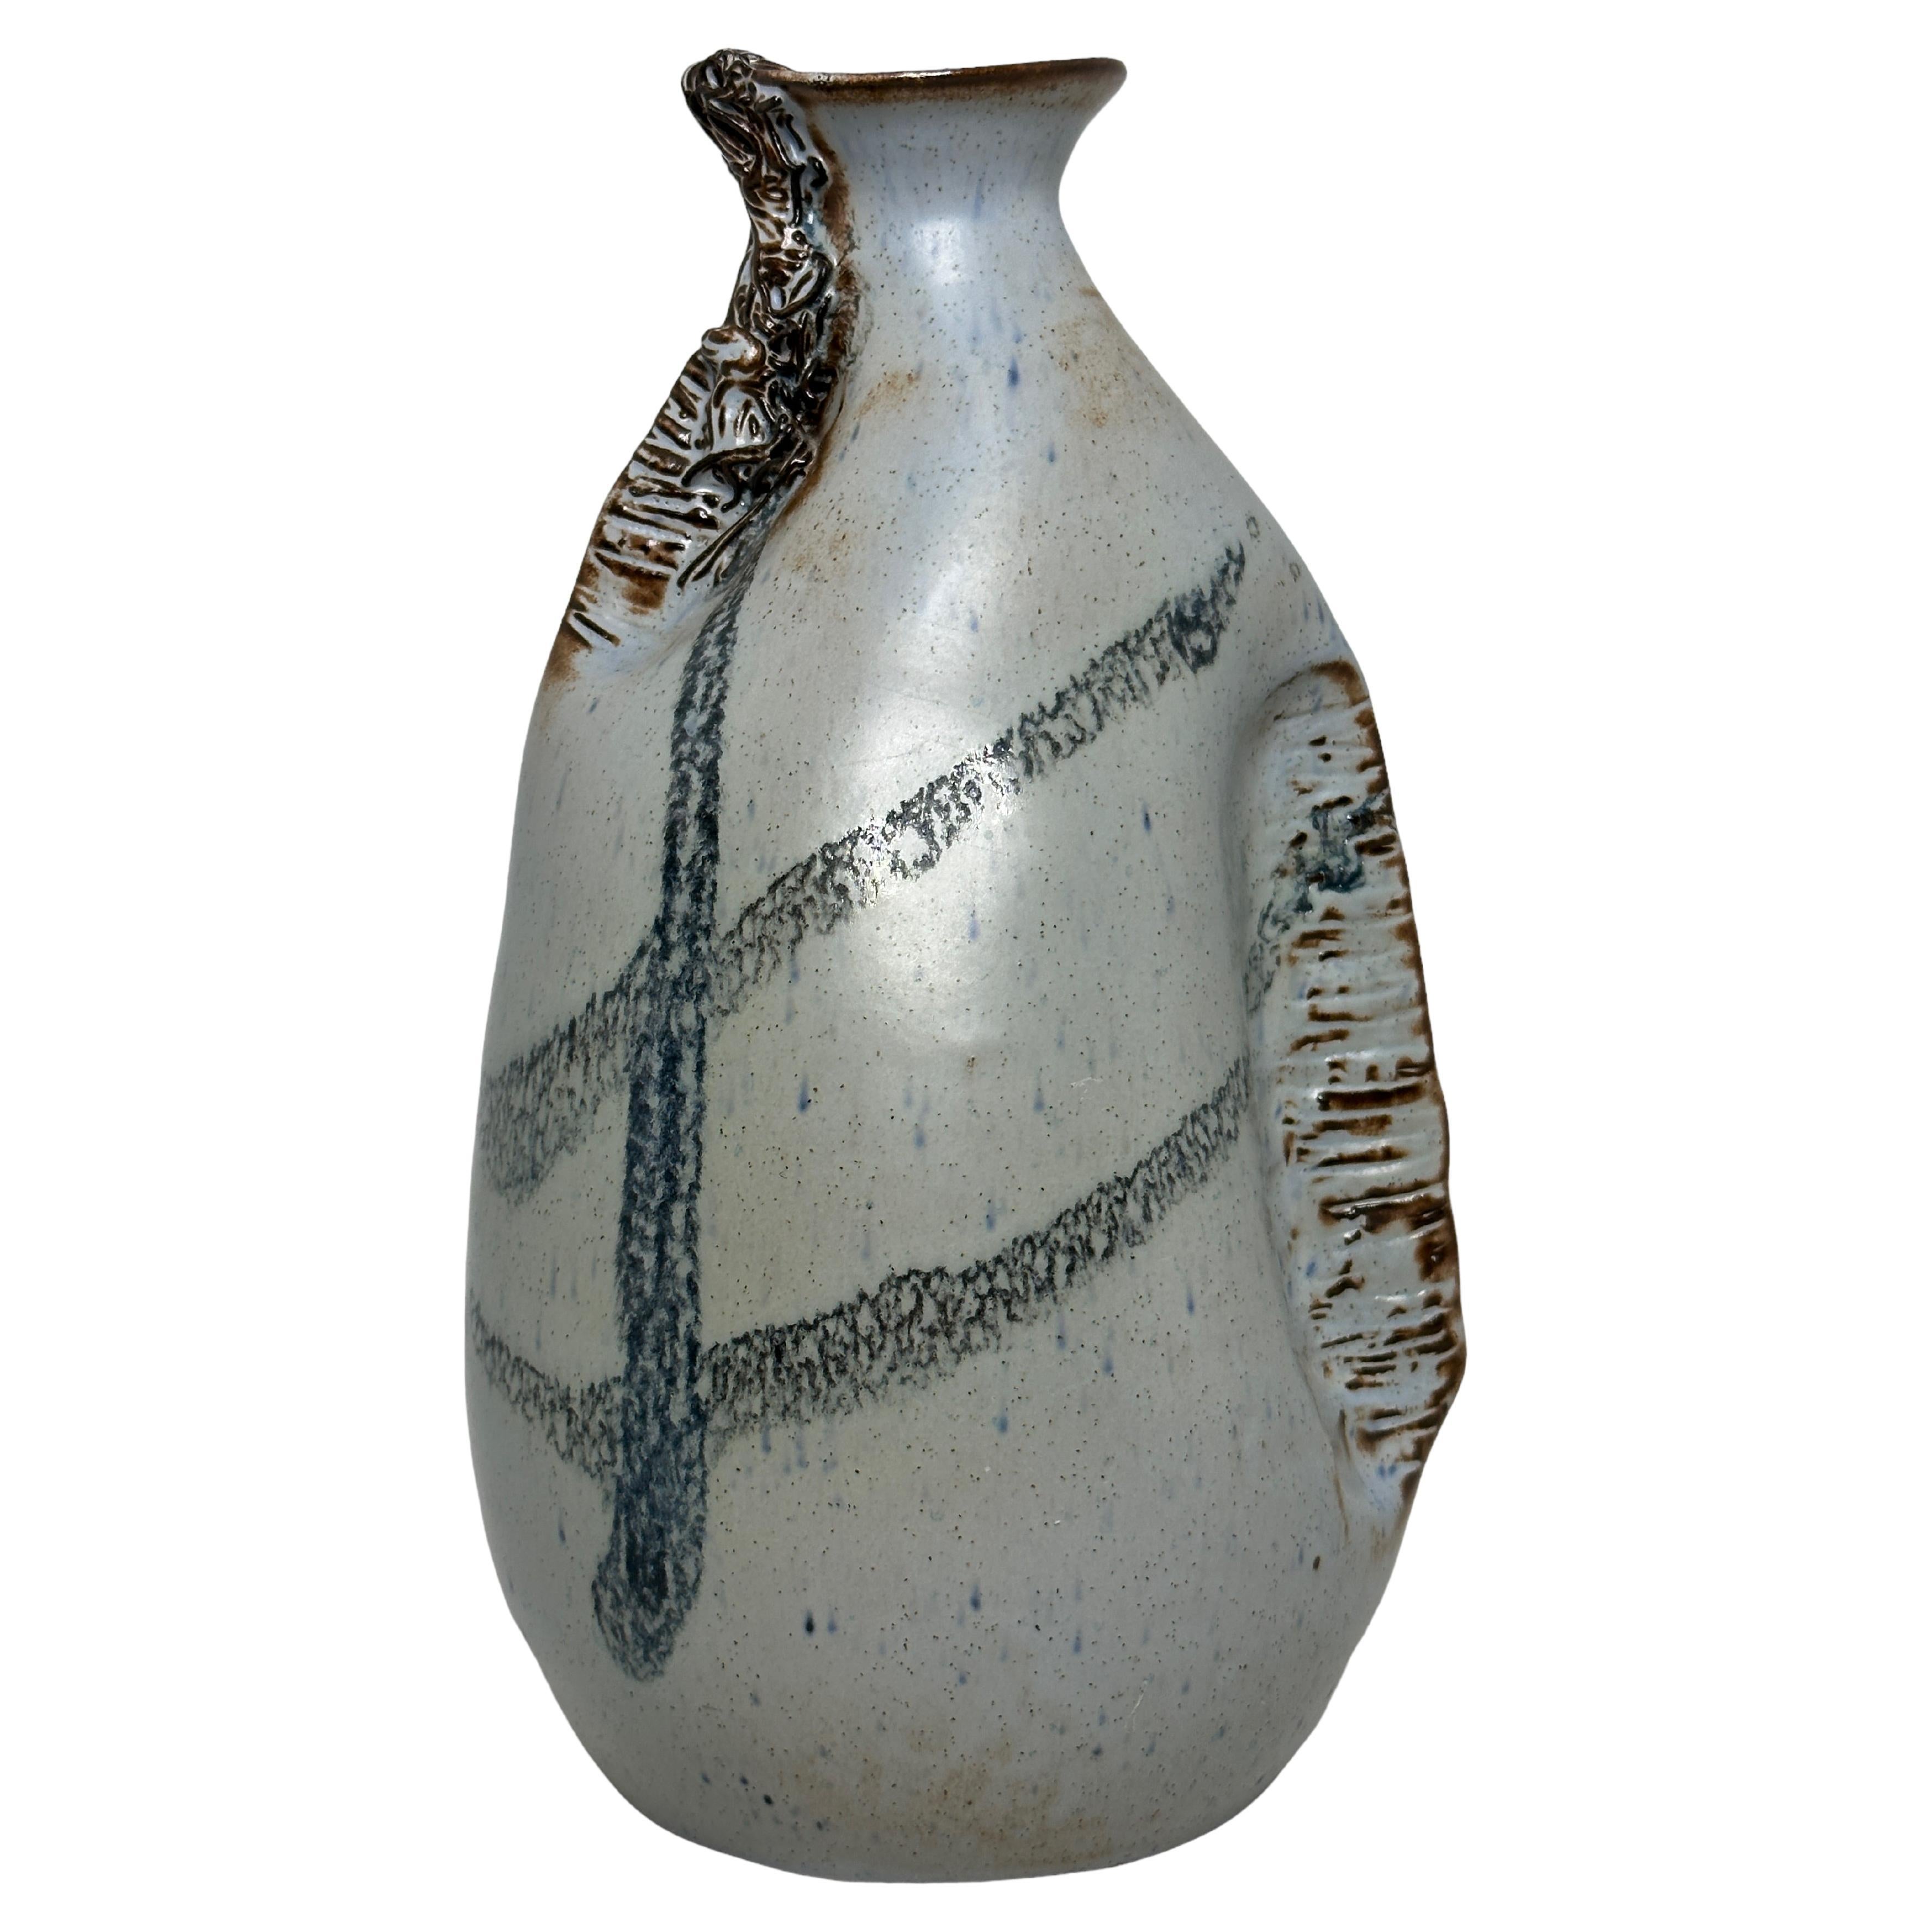 Signed Hand-Painted Studio Art Pottery Sculpture Vase Vintage